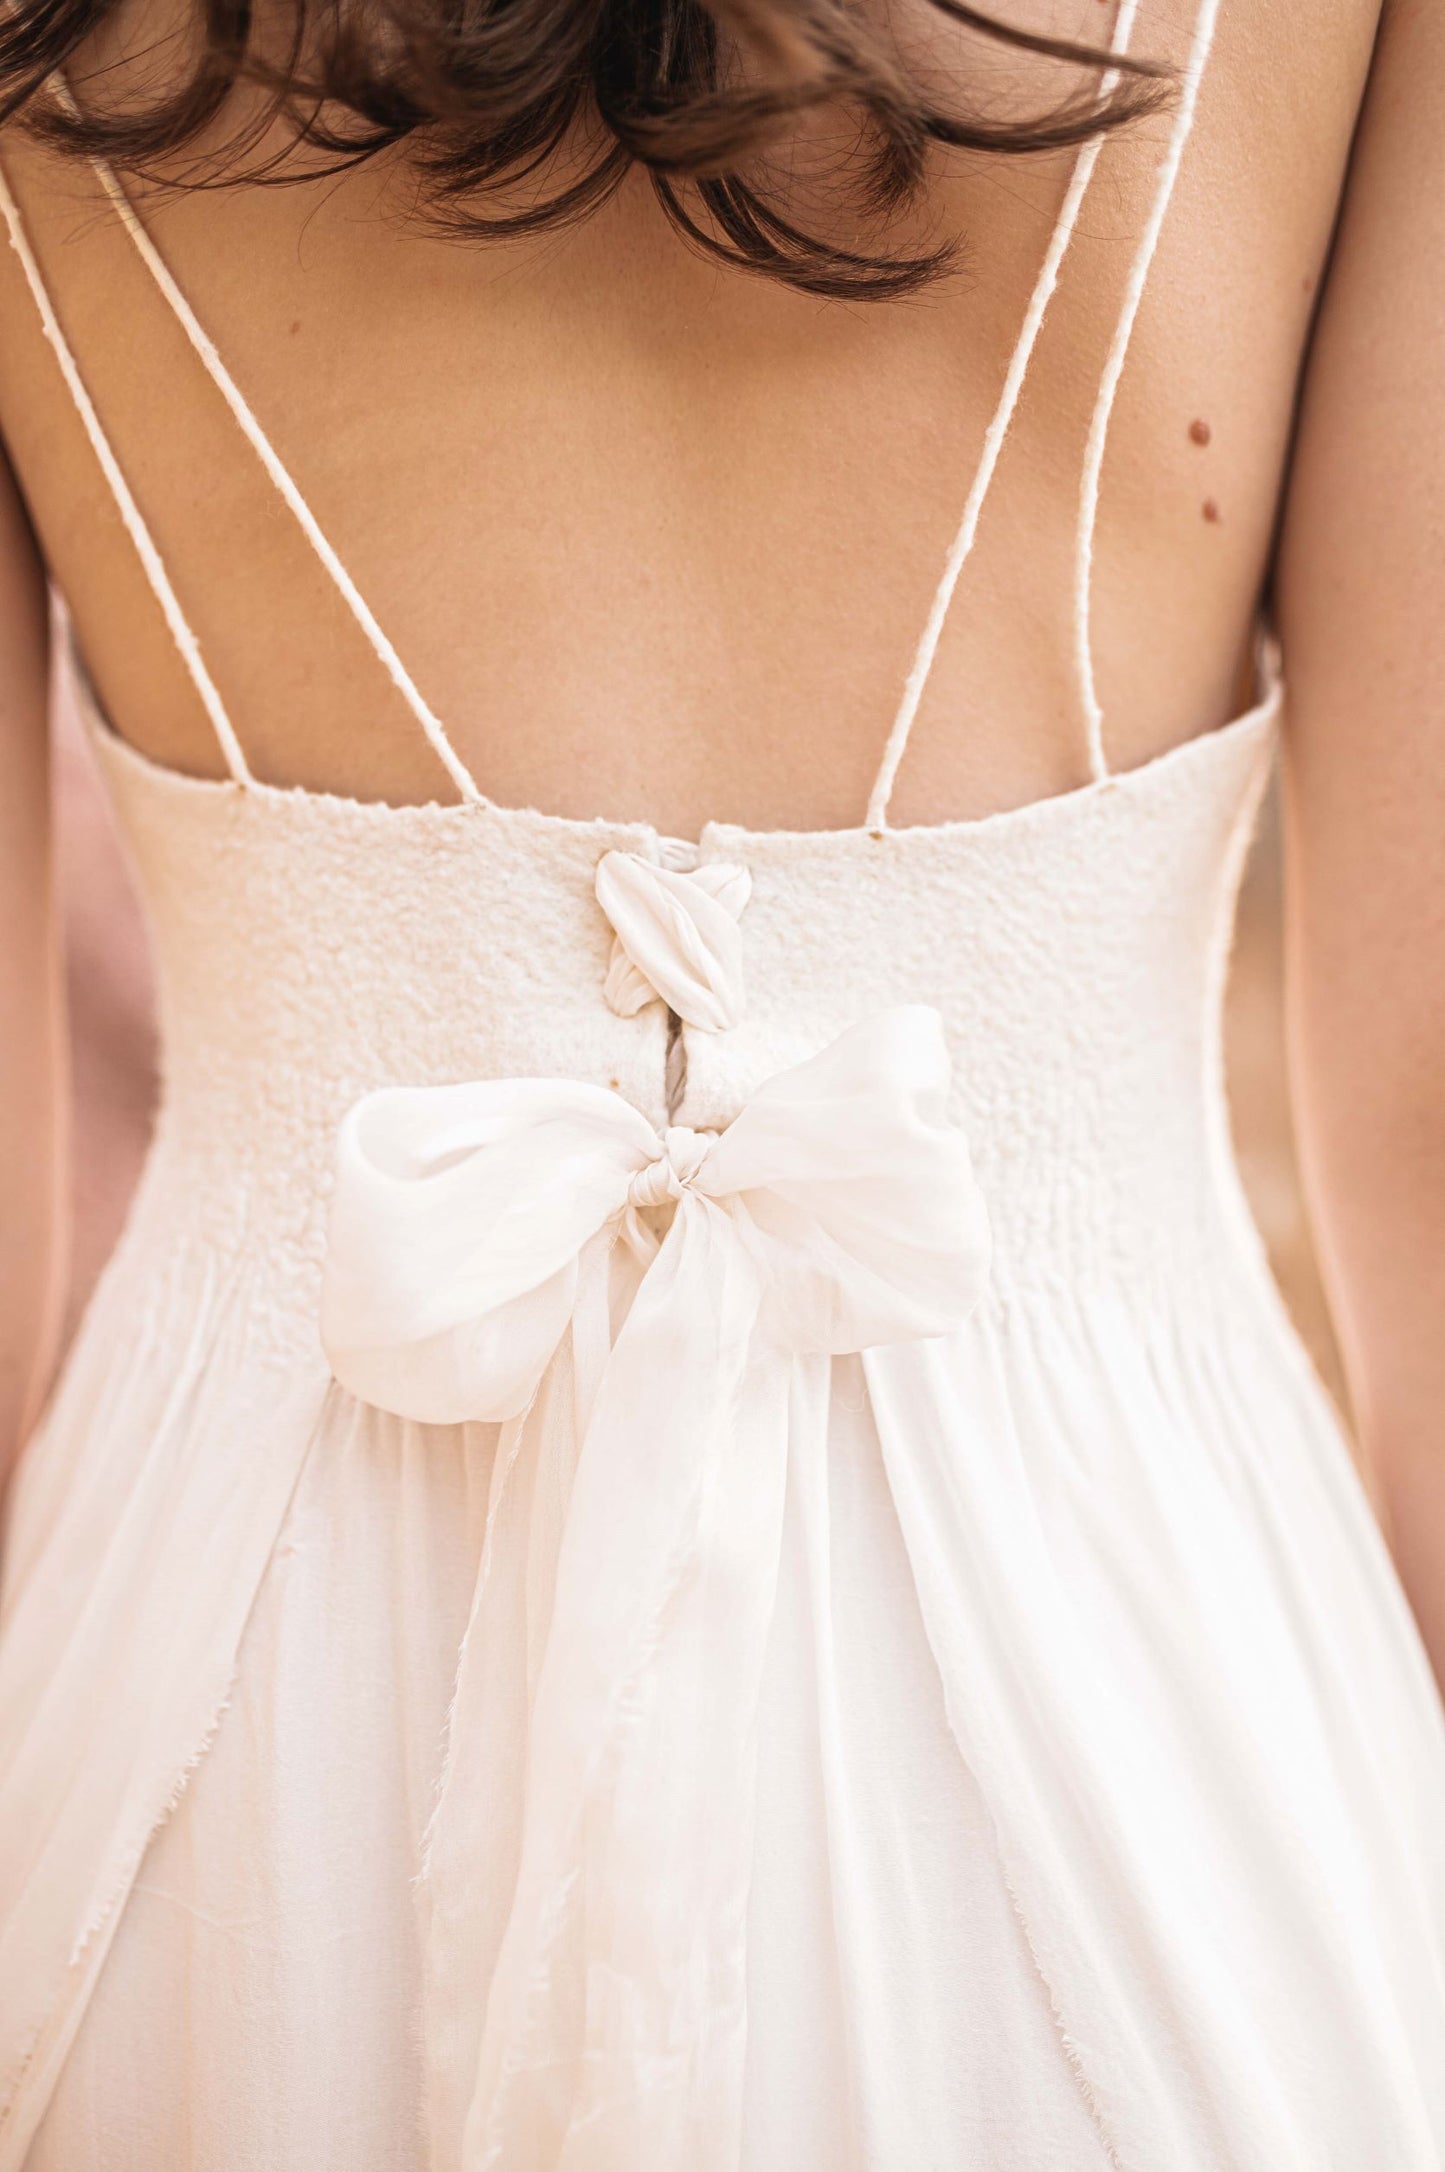 Lily menyasszonyi ruha selyem masni